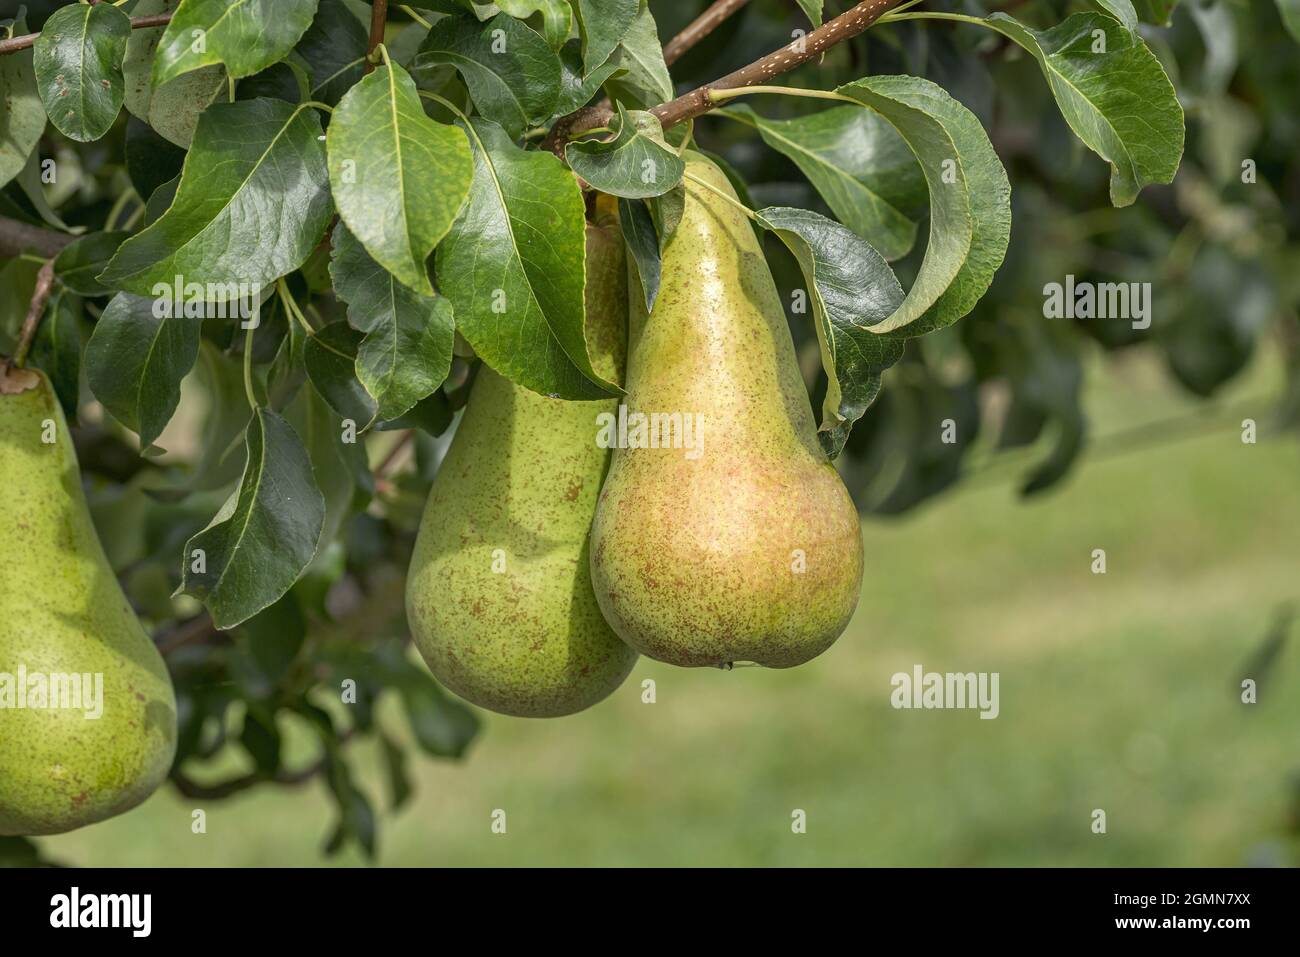 Common pear (Pyrus communis 'Concorde', Pyrus communis Concorde), pear on a tree, cultivar Concorde Stock Photo